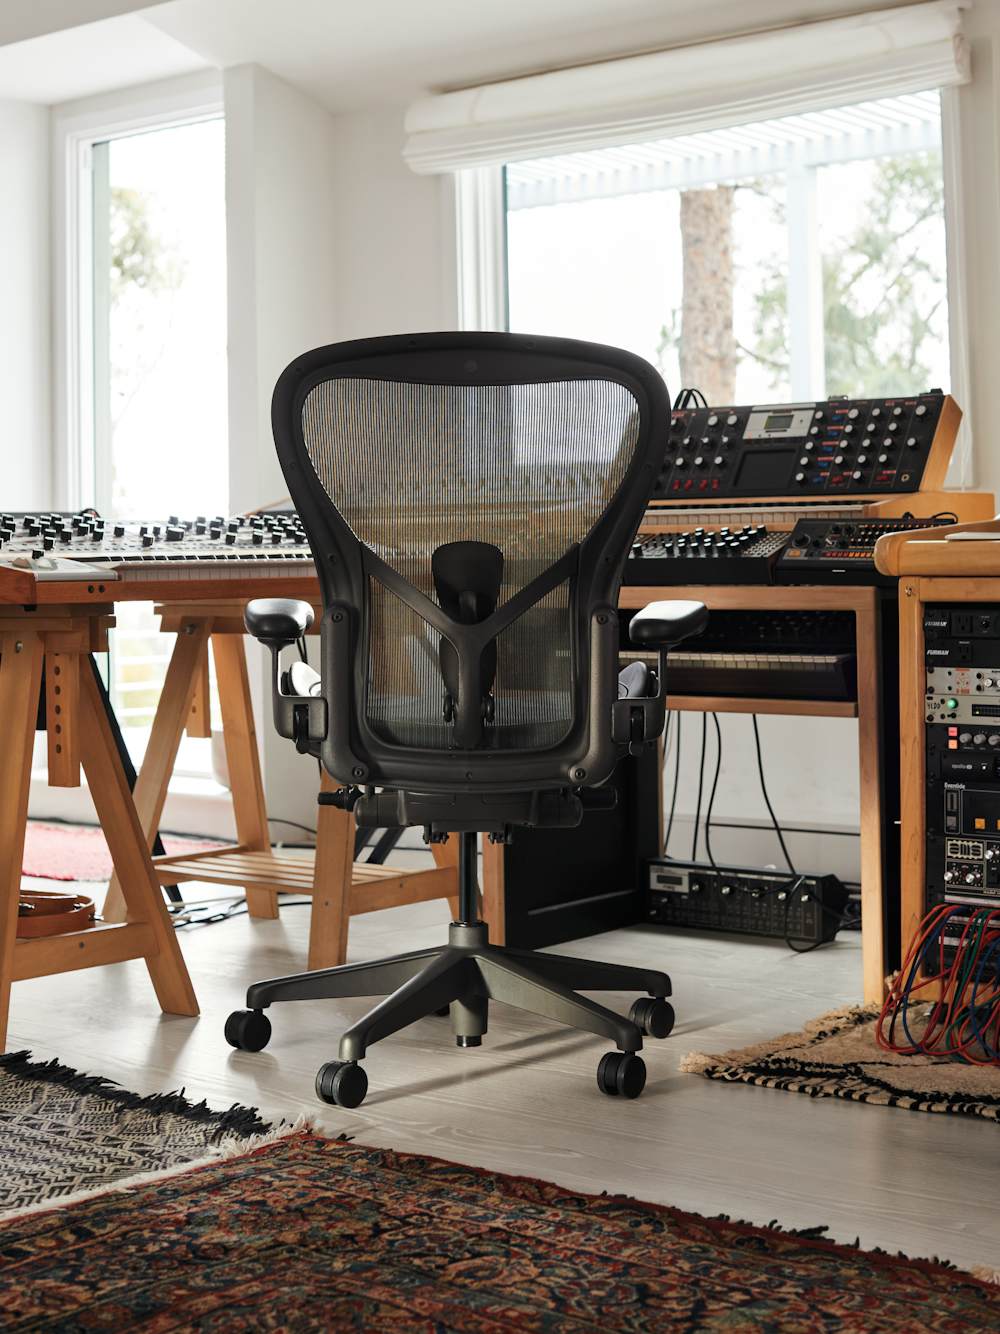 Aeron Chairs in Rostam's Studio